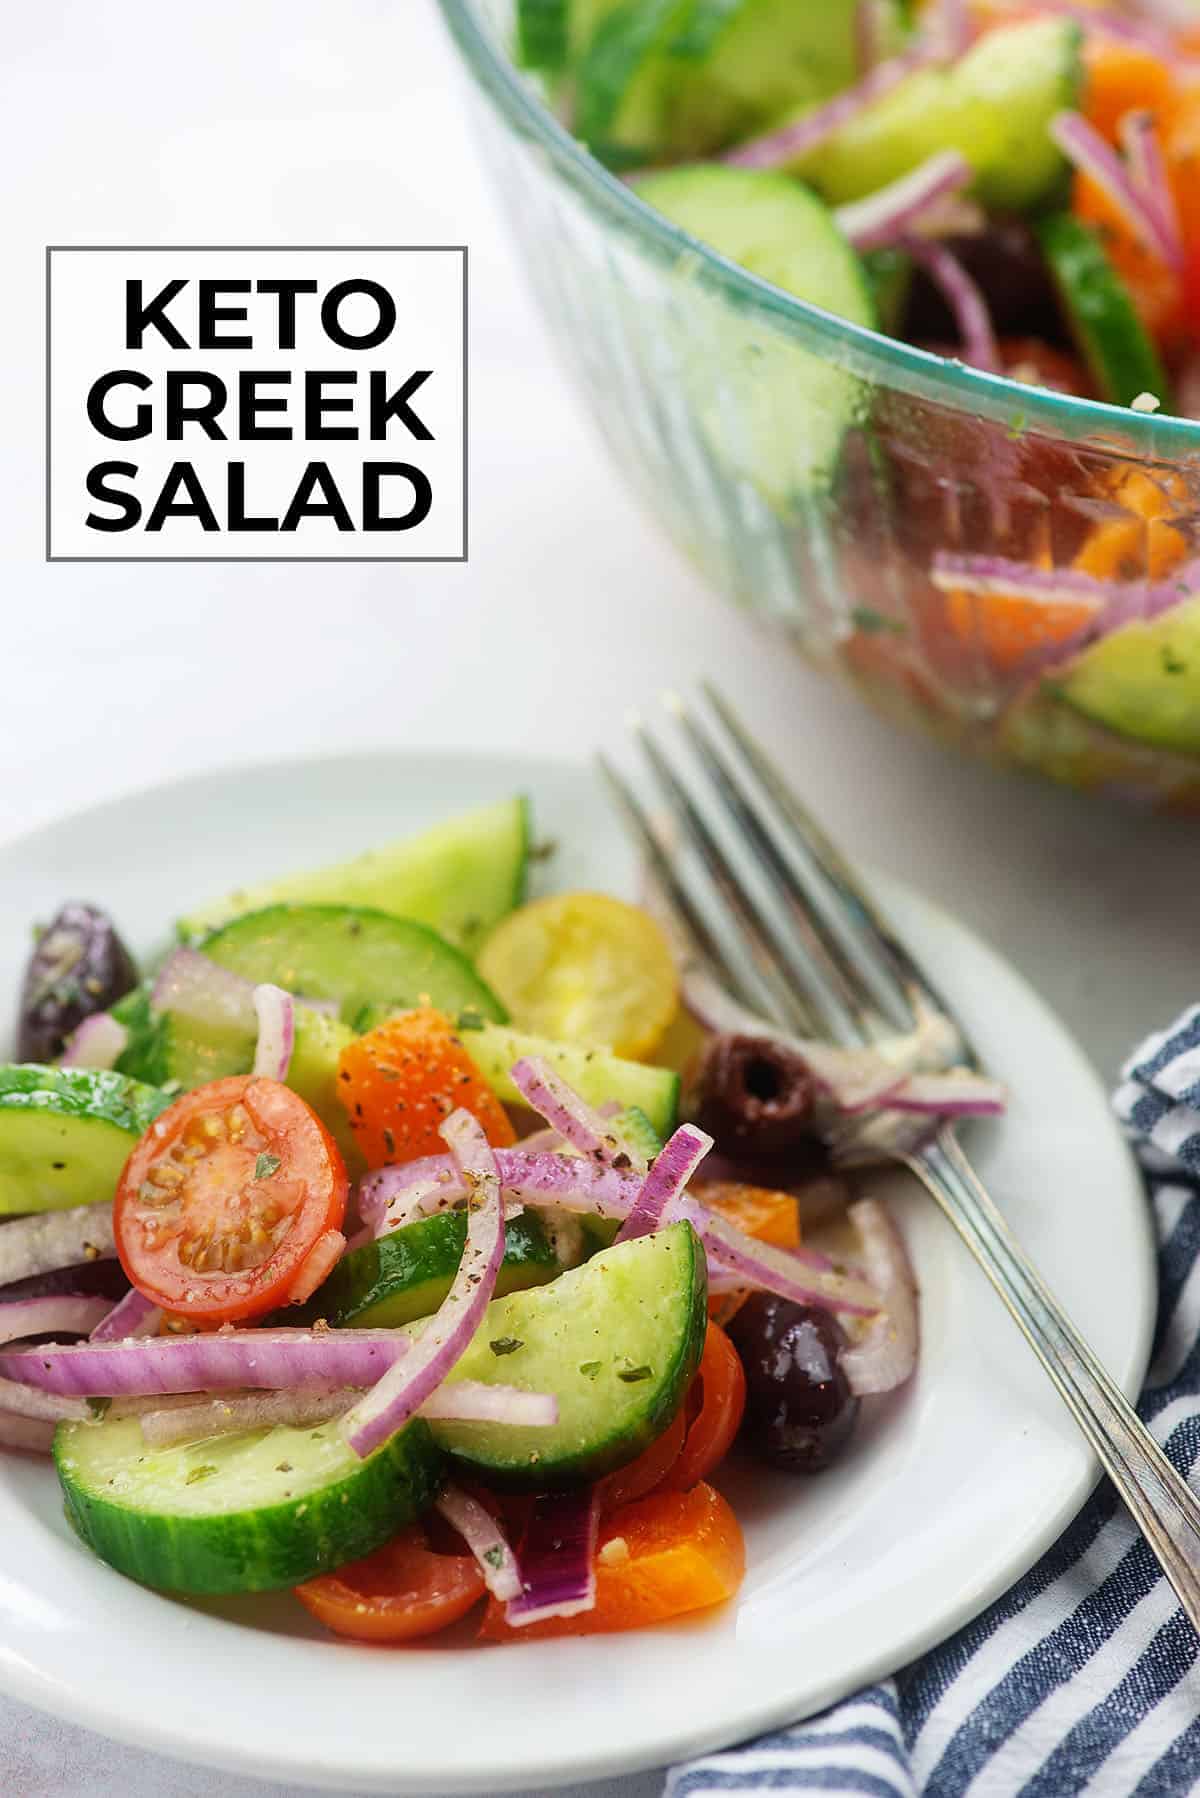 keto greek salad on white plate with blue striped napkin